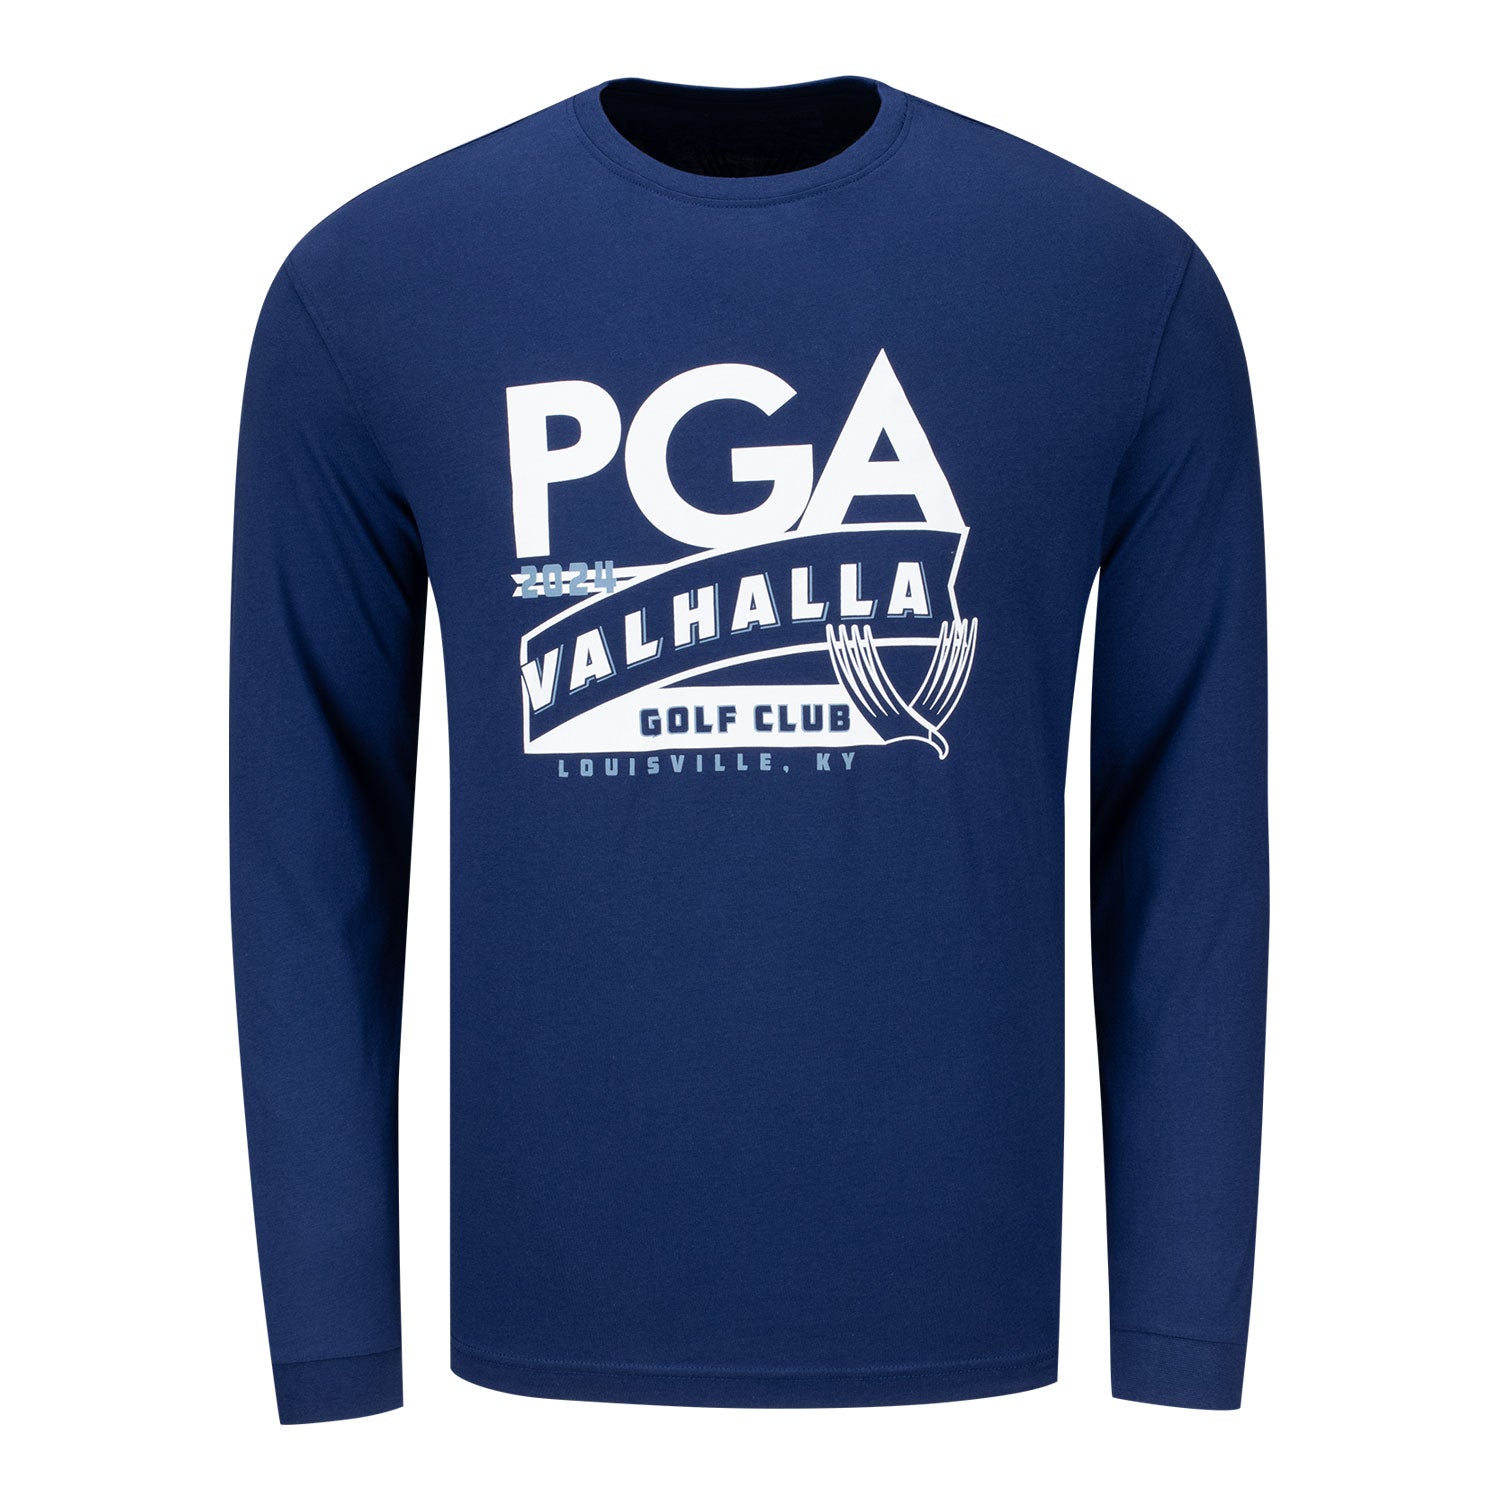 Authentic PGA Championship Apparel - PGA Shop